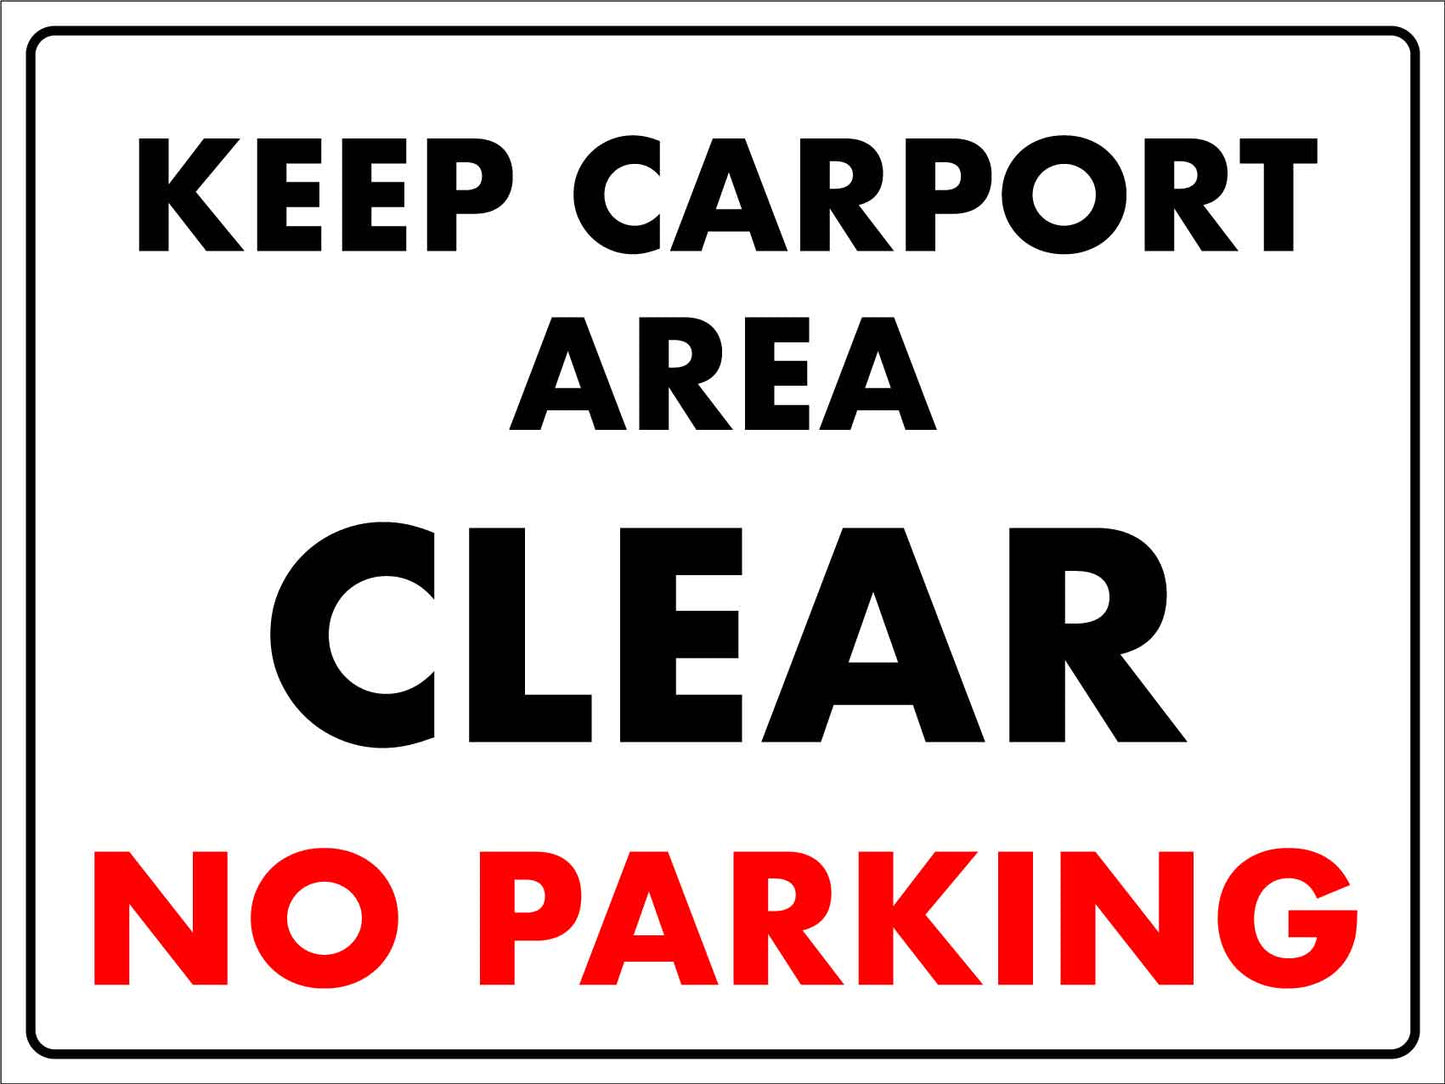 Keep Carport Area Clear No Parking Sign